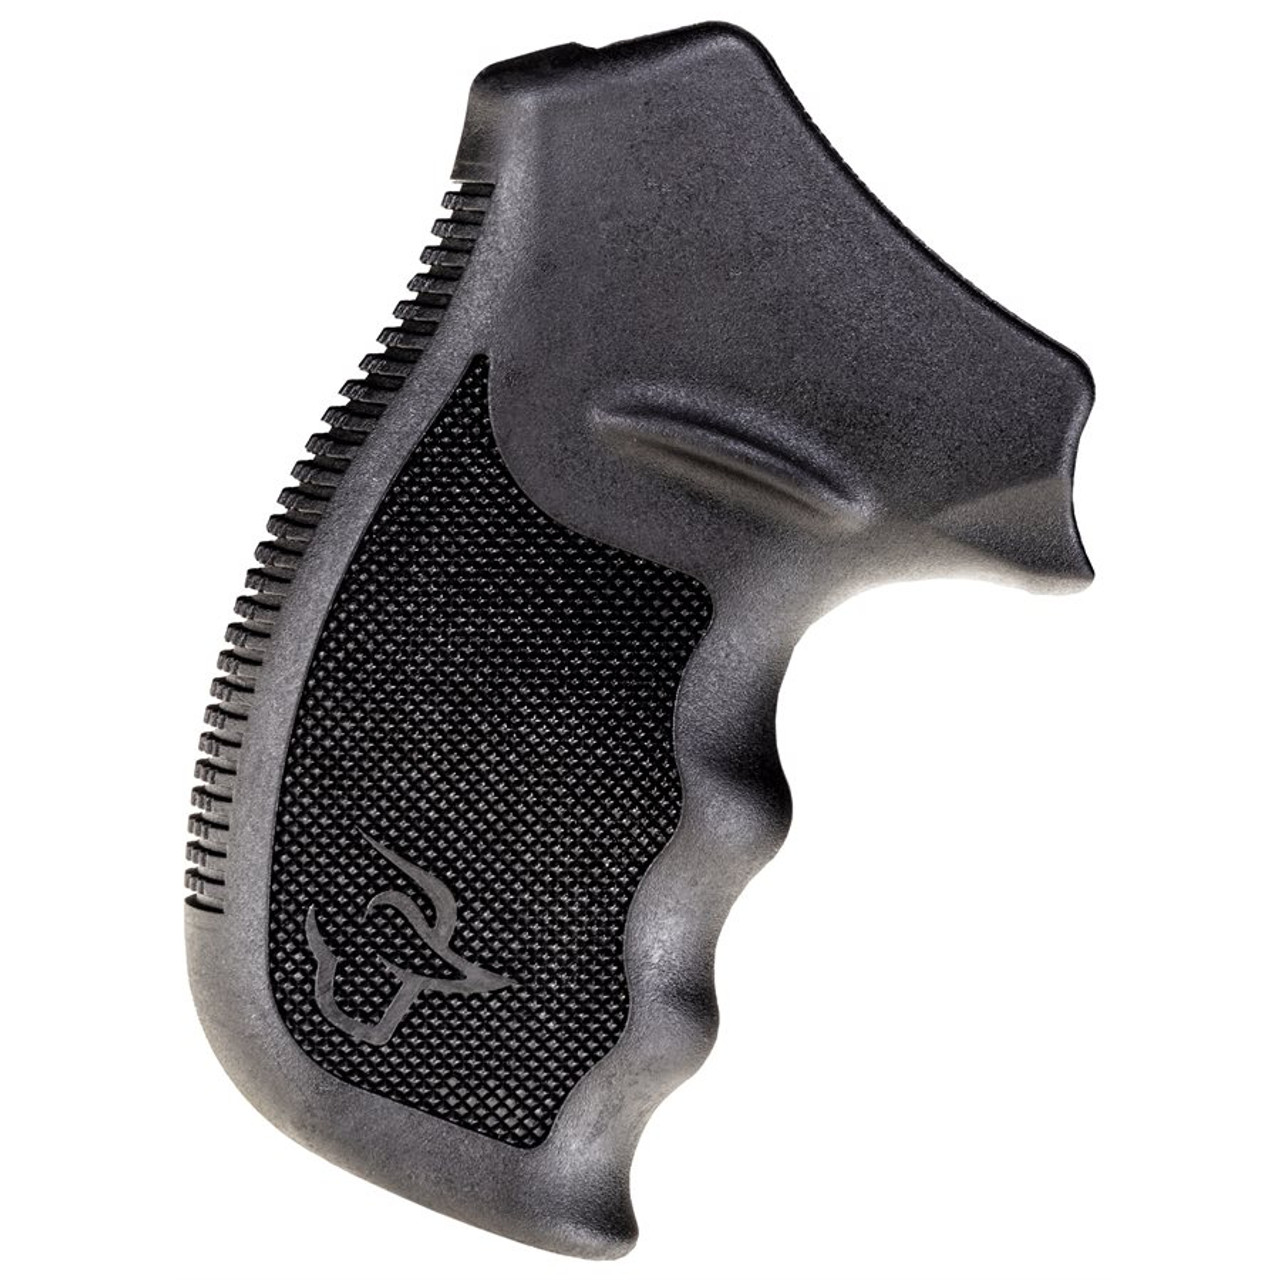 Taurus Judge/Tracker Rubber Grip & Pin 